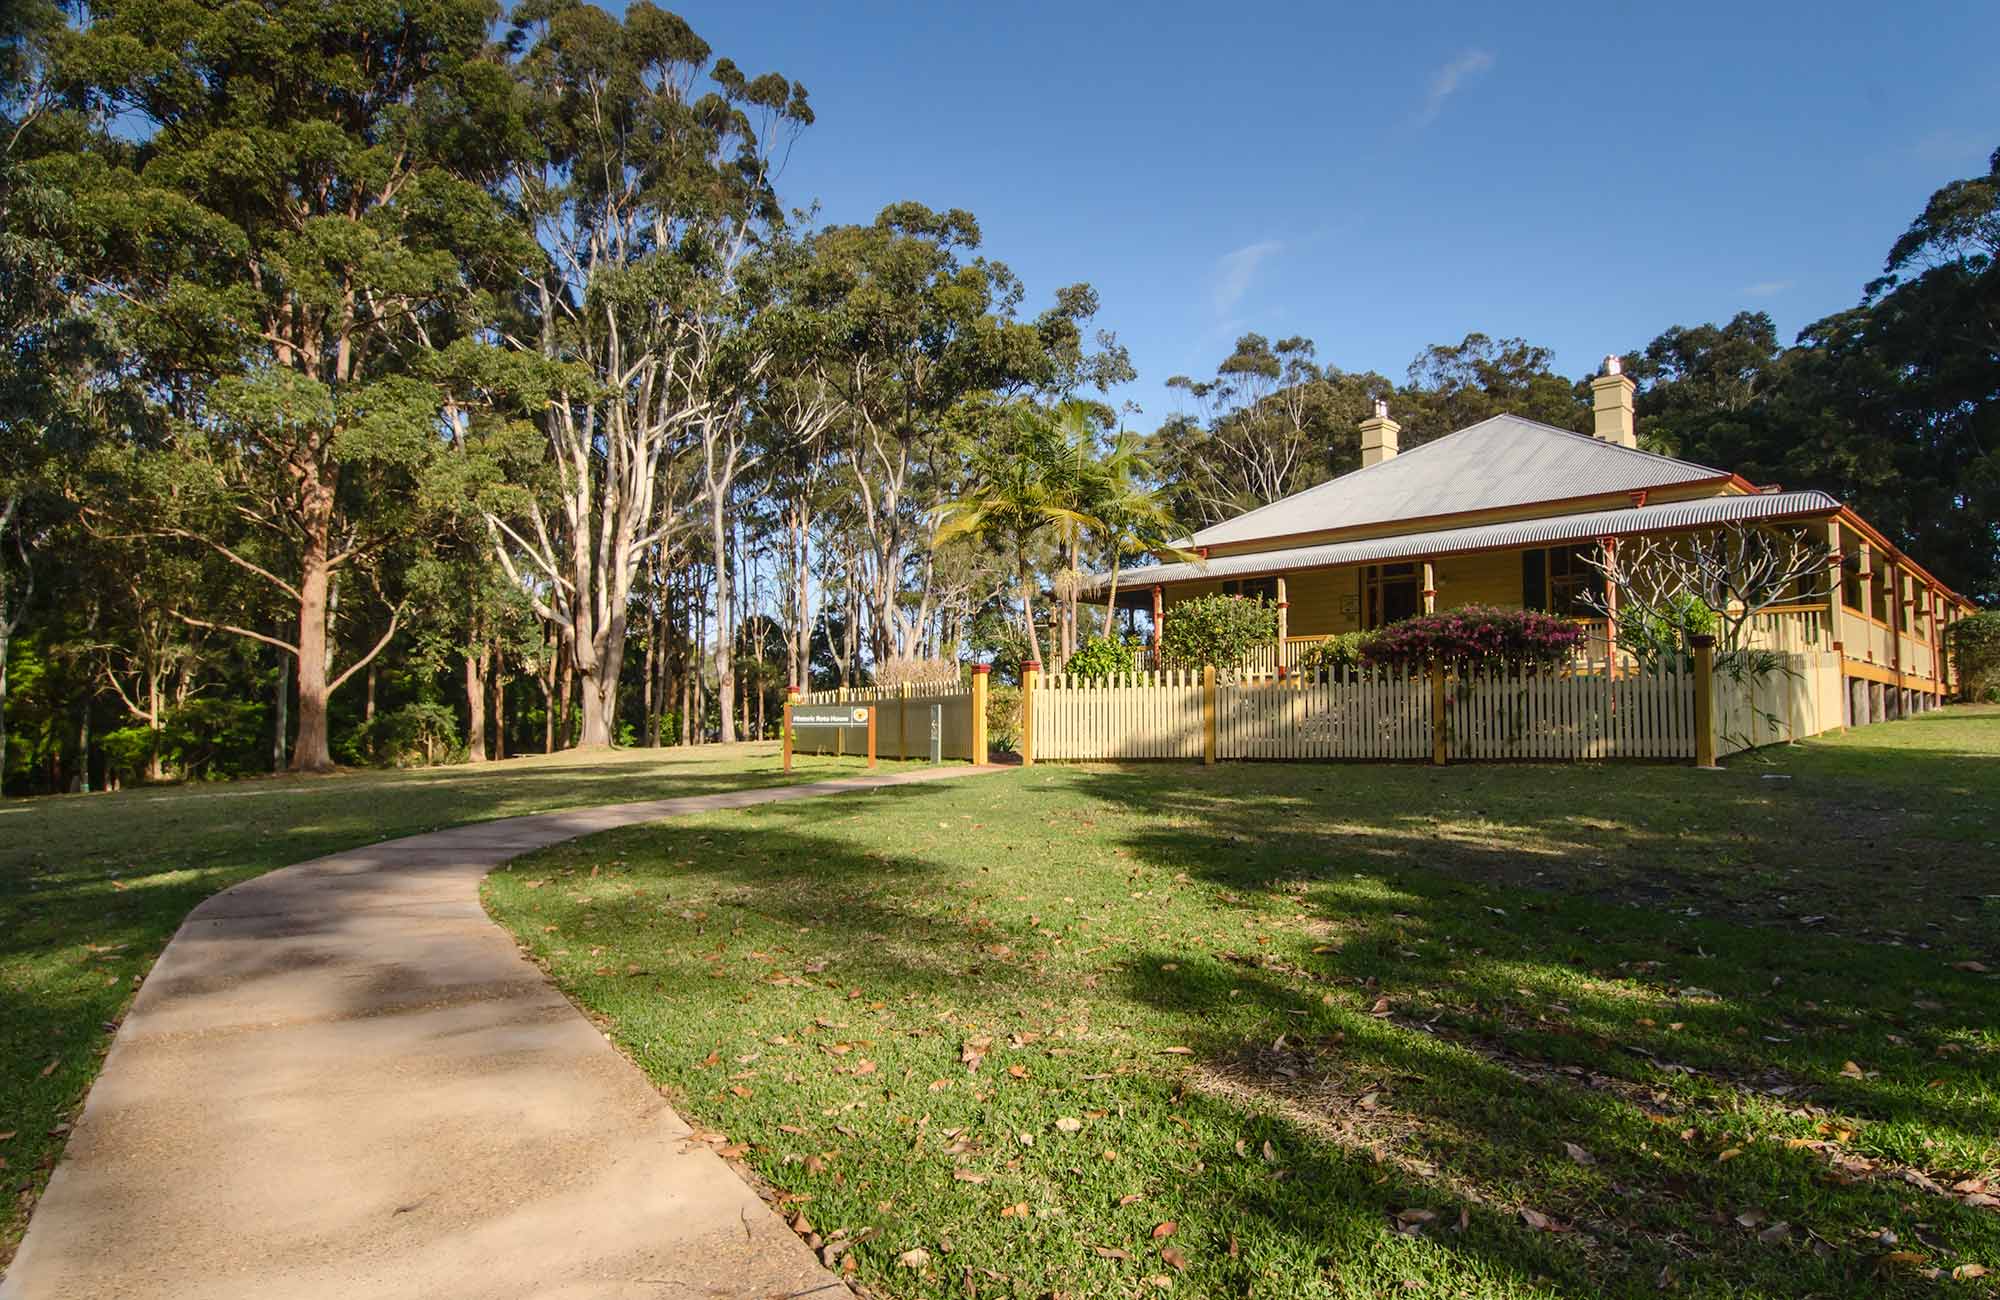 Roto House, Roto House Historic Site. Photo: John Spencer/NSW Government